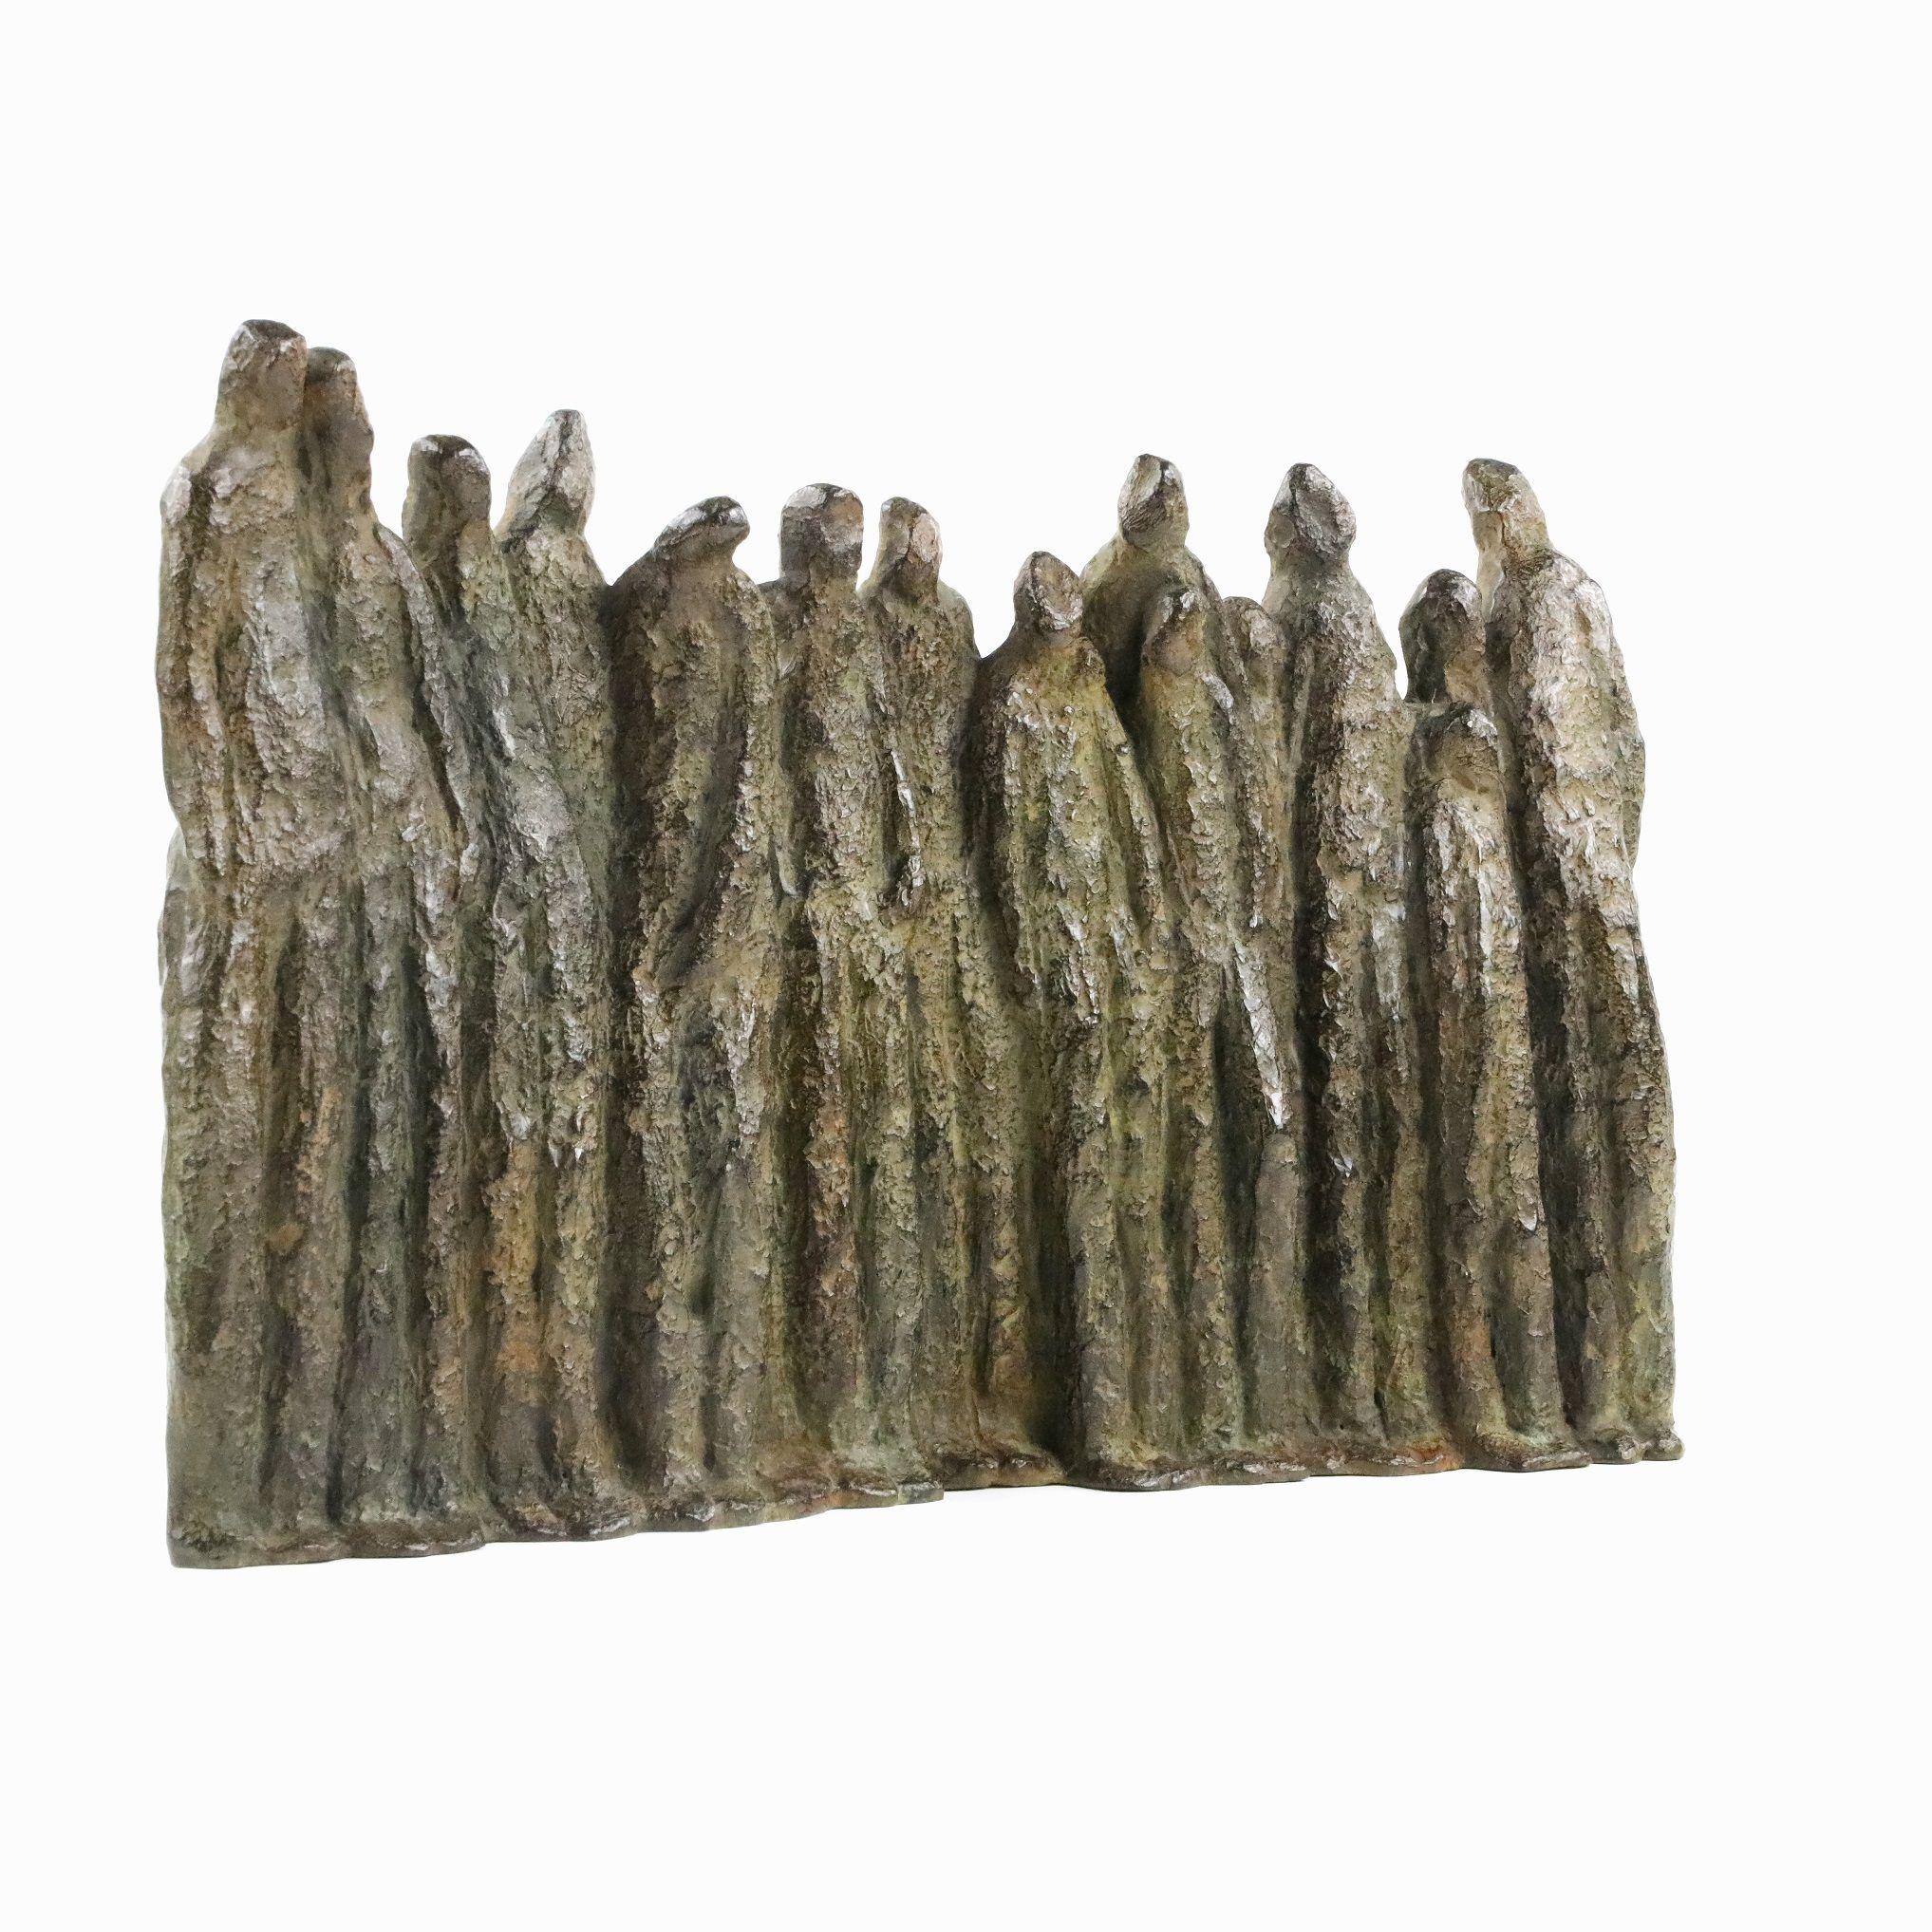 Group II de Delphine Brabant - Sculpture figurative en bronze, silhouettes humaines  en vente 2